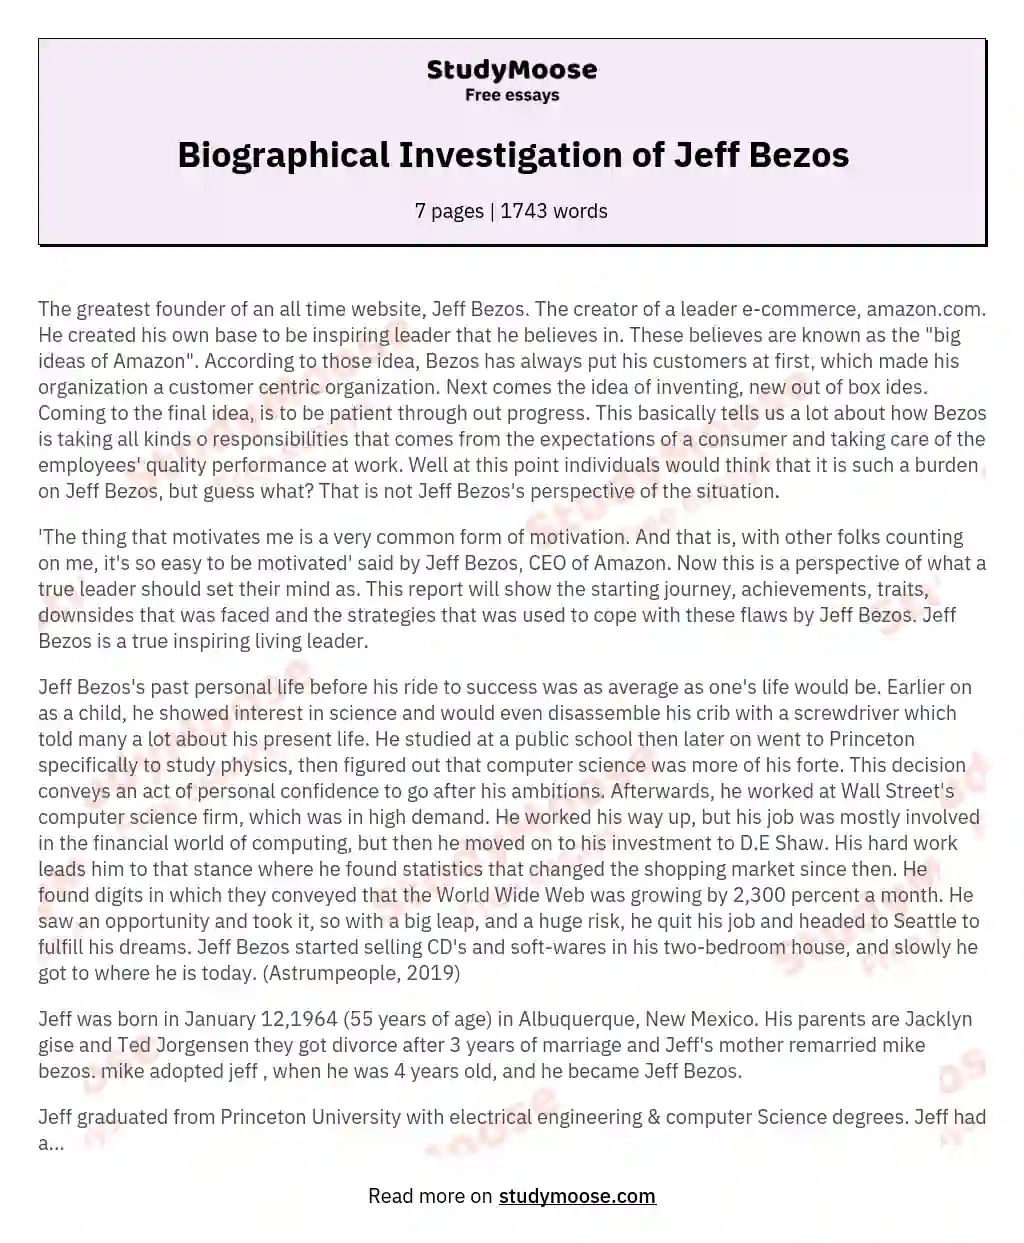 Biographical Investigation of Jeff Bezos essay